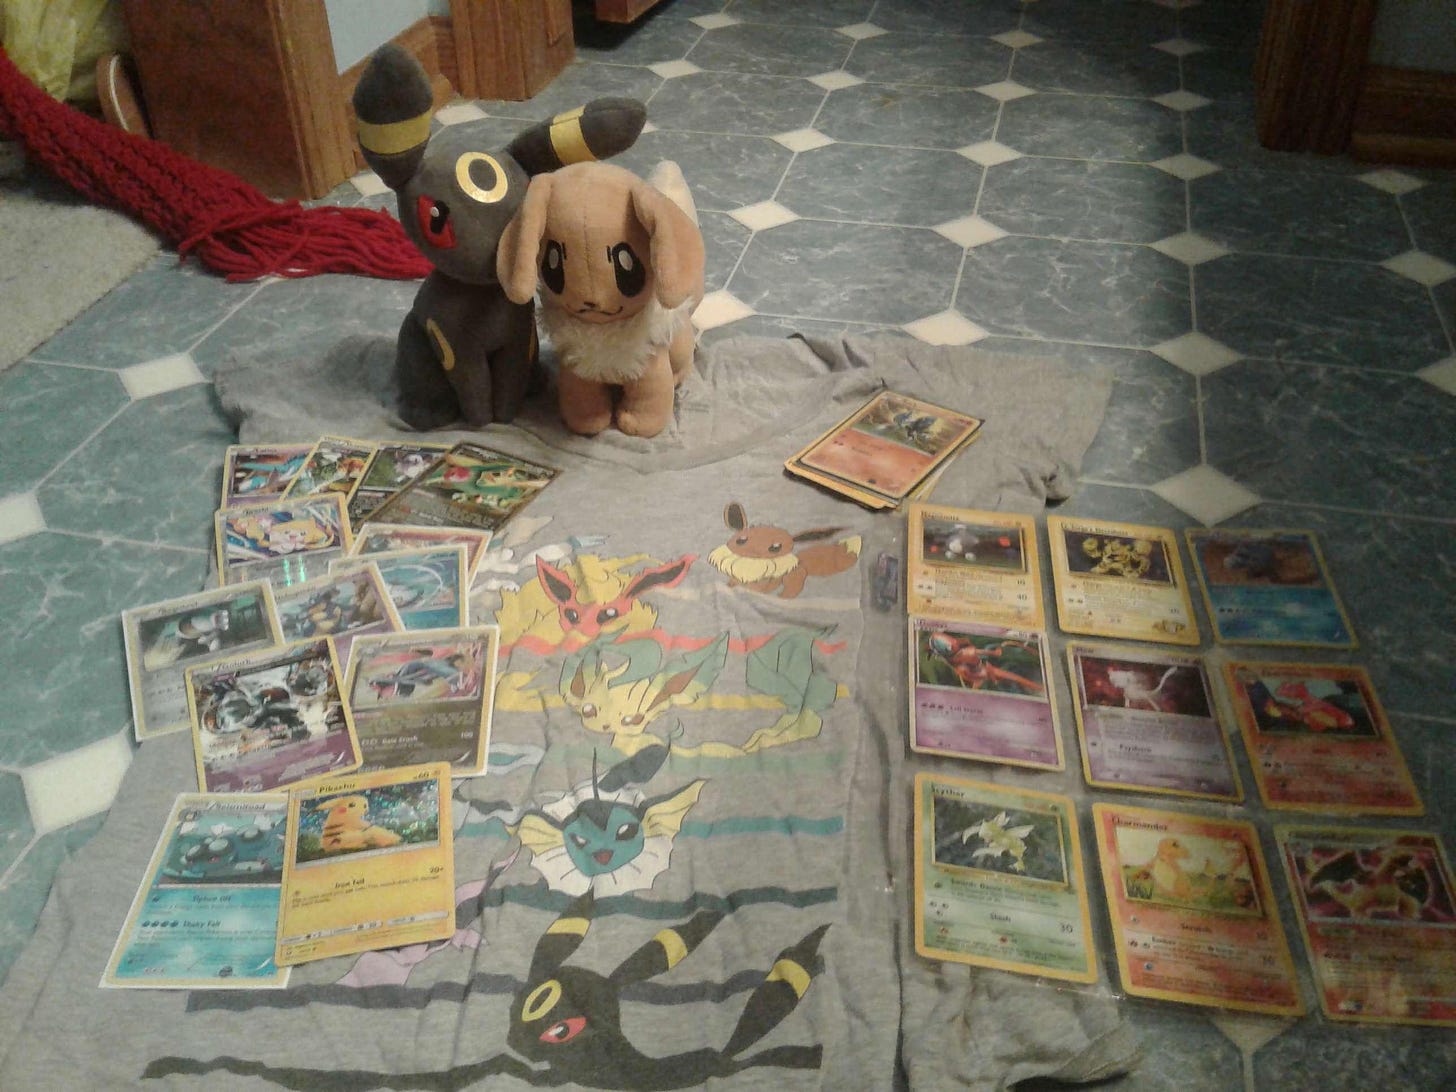 A photo of CelestialBlaziken's Pokémon cards, plush toys and a shirt